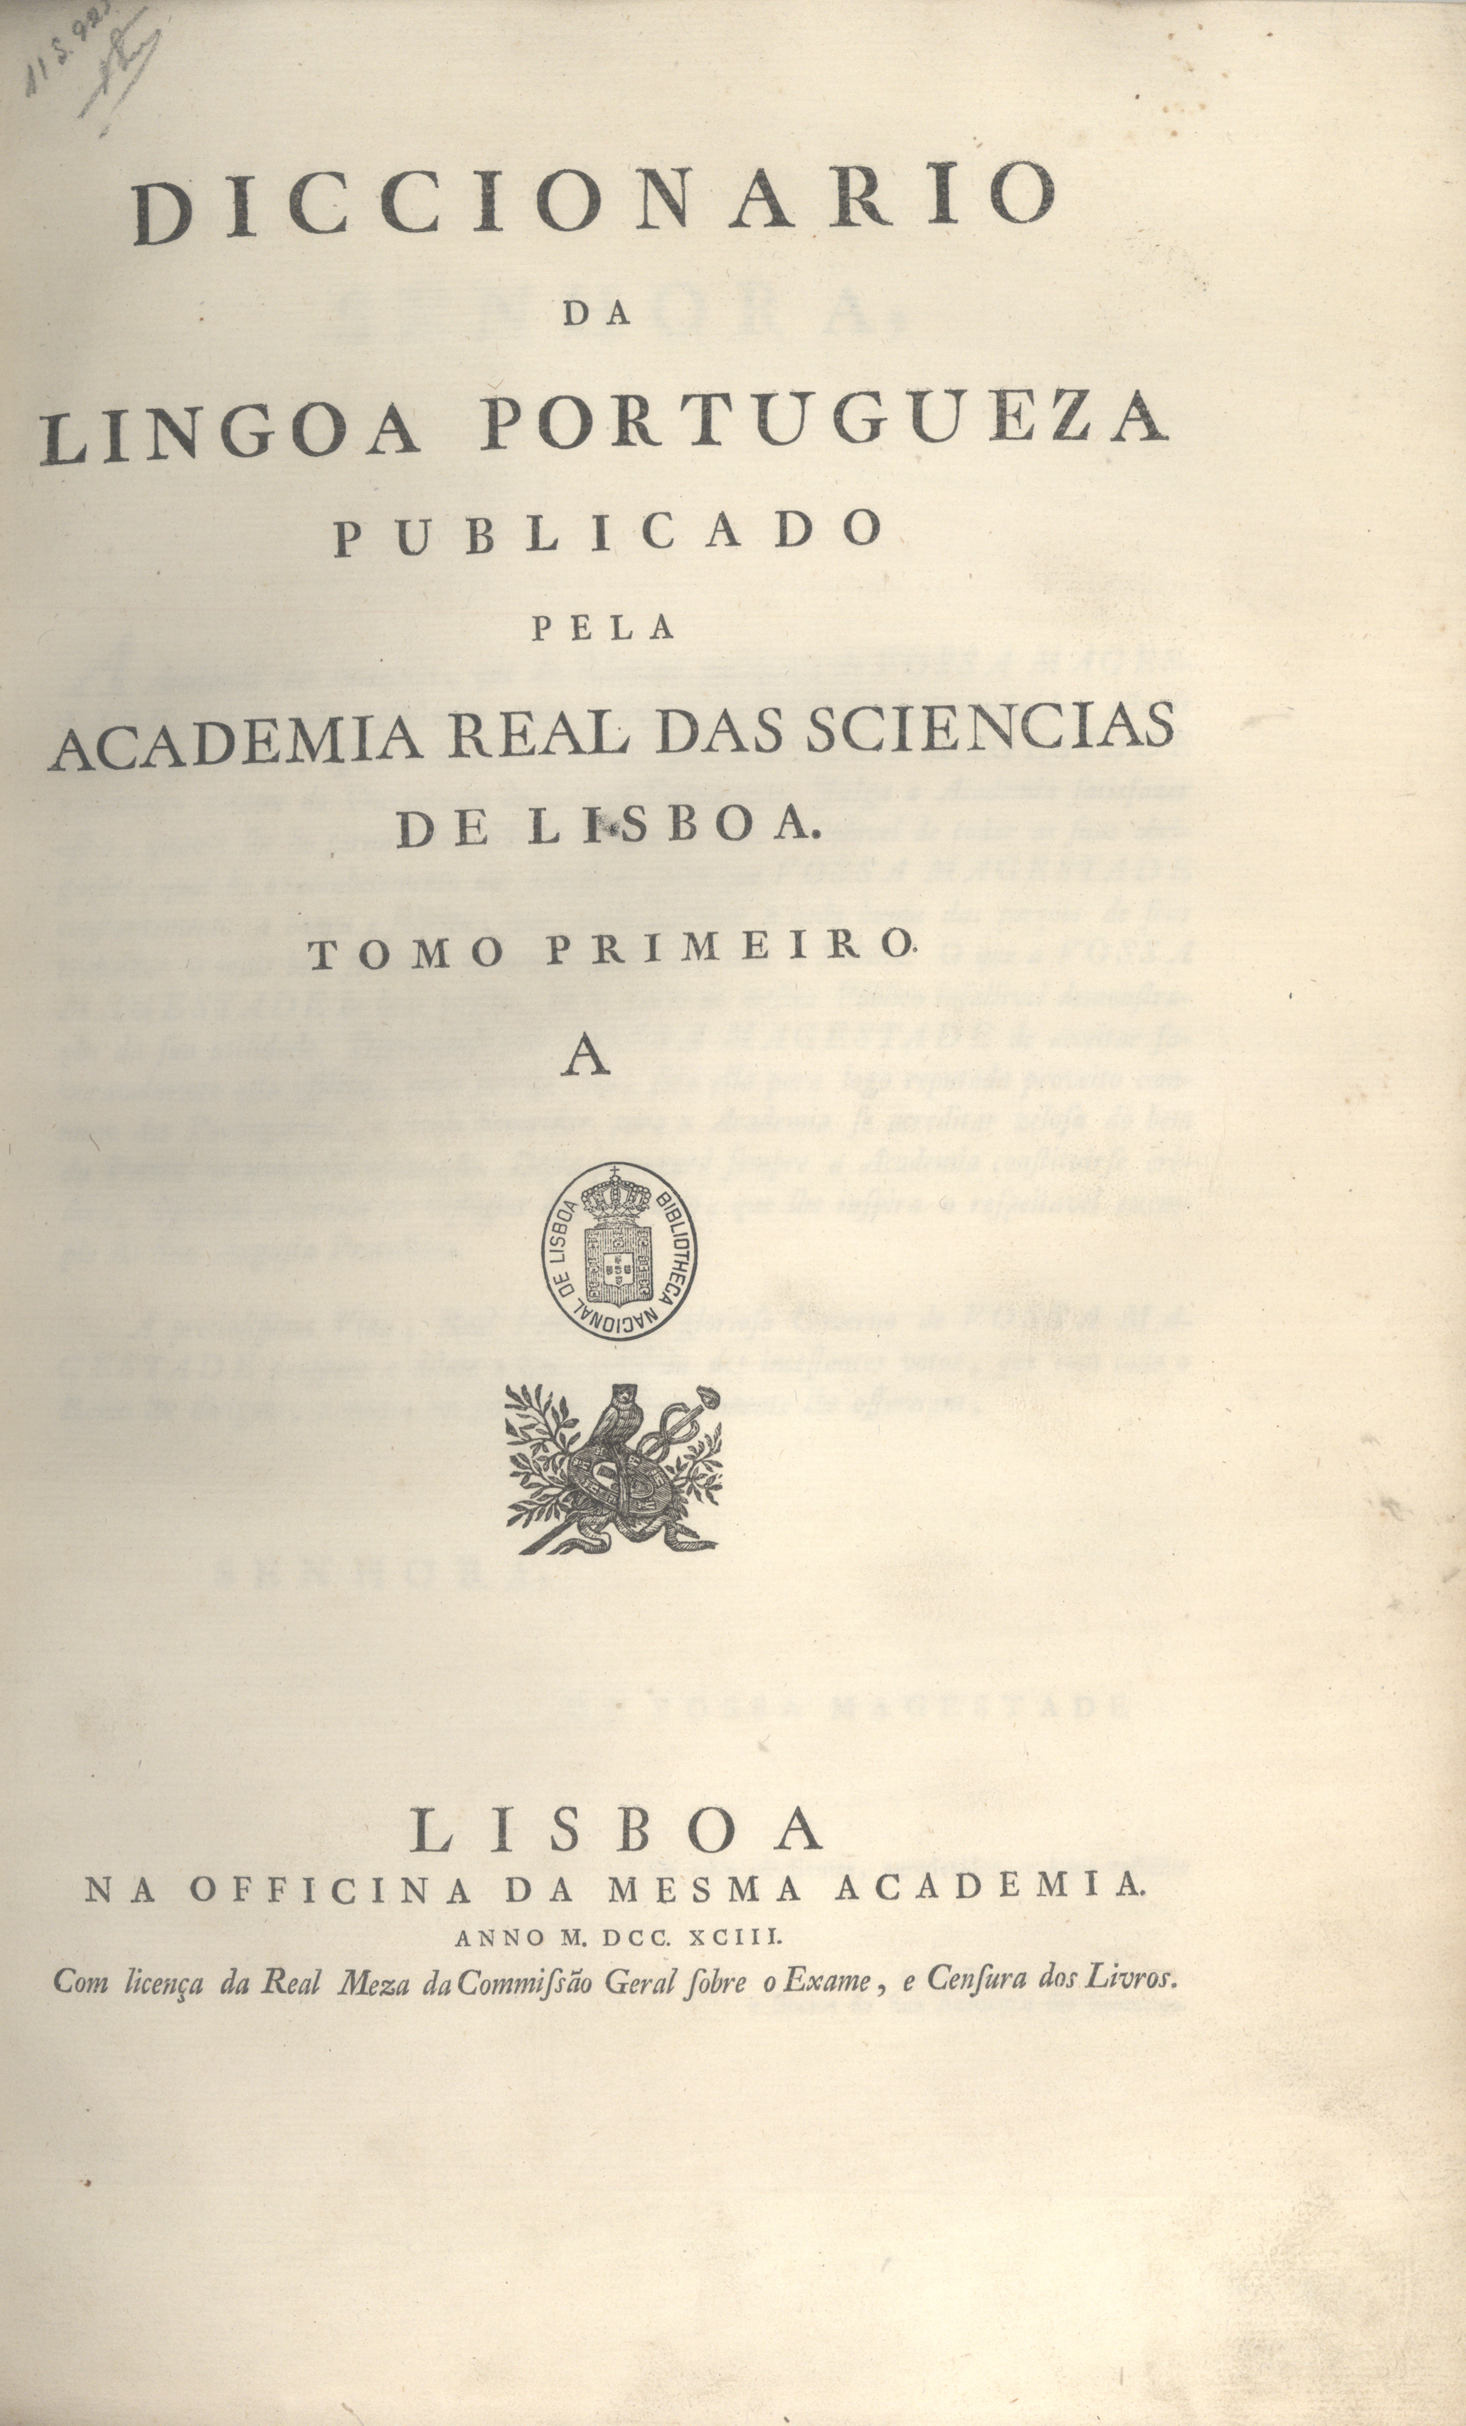 Cover of Diccionario da lingoa portugueza / publicado pela Academia Real das Sciencias de Lisboa. - Lisboa : na Officina da mesma Academia, 1793. - CC, [1, 1 br., 2], 543, [1 br., 1, 1 br.] p. ; 2º (45 cm)